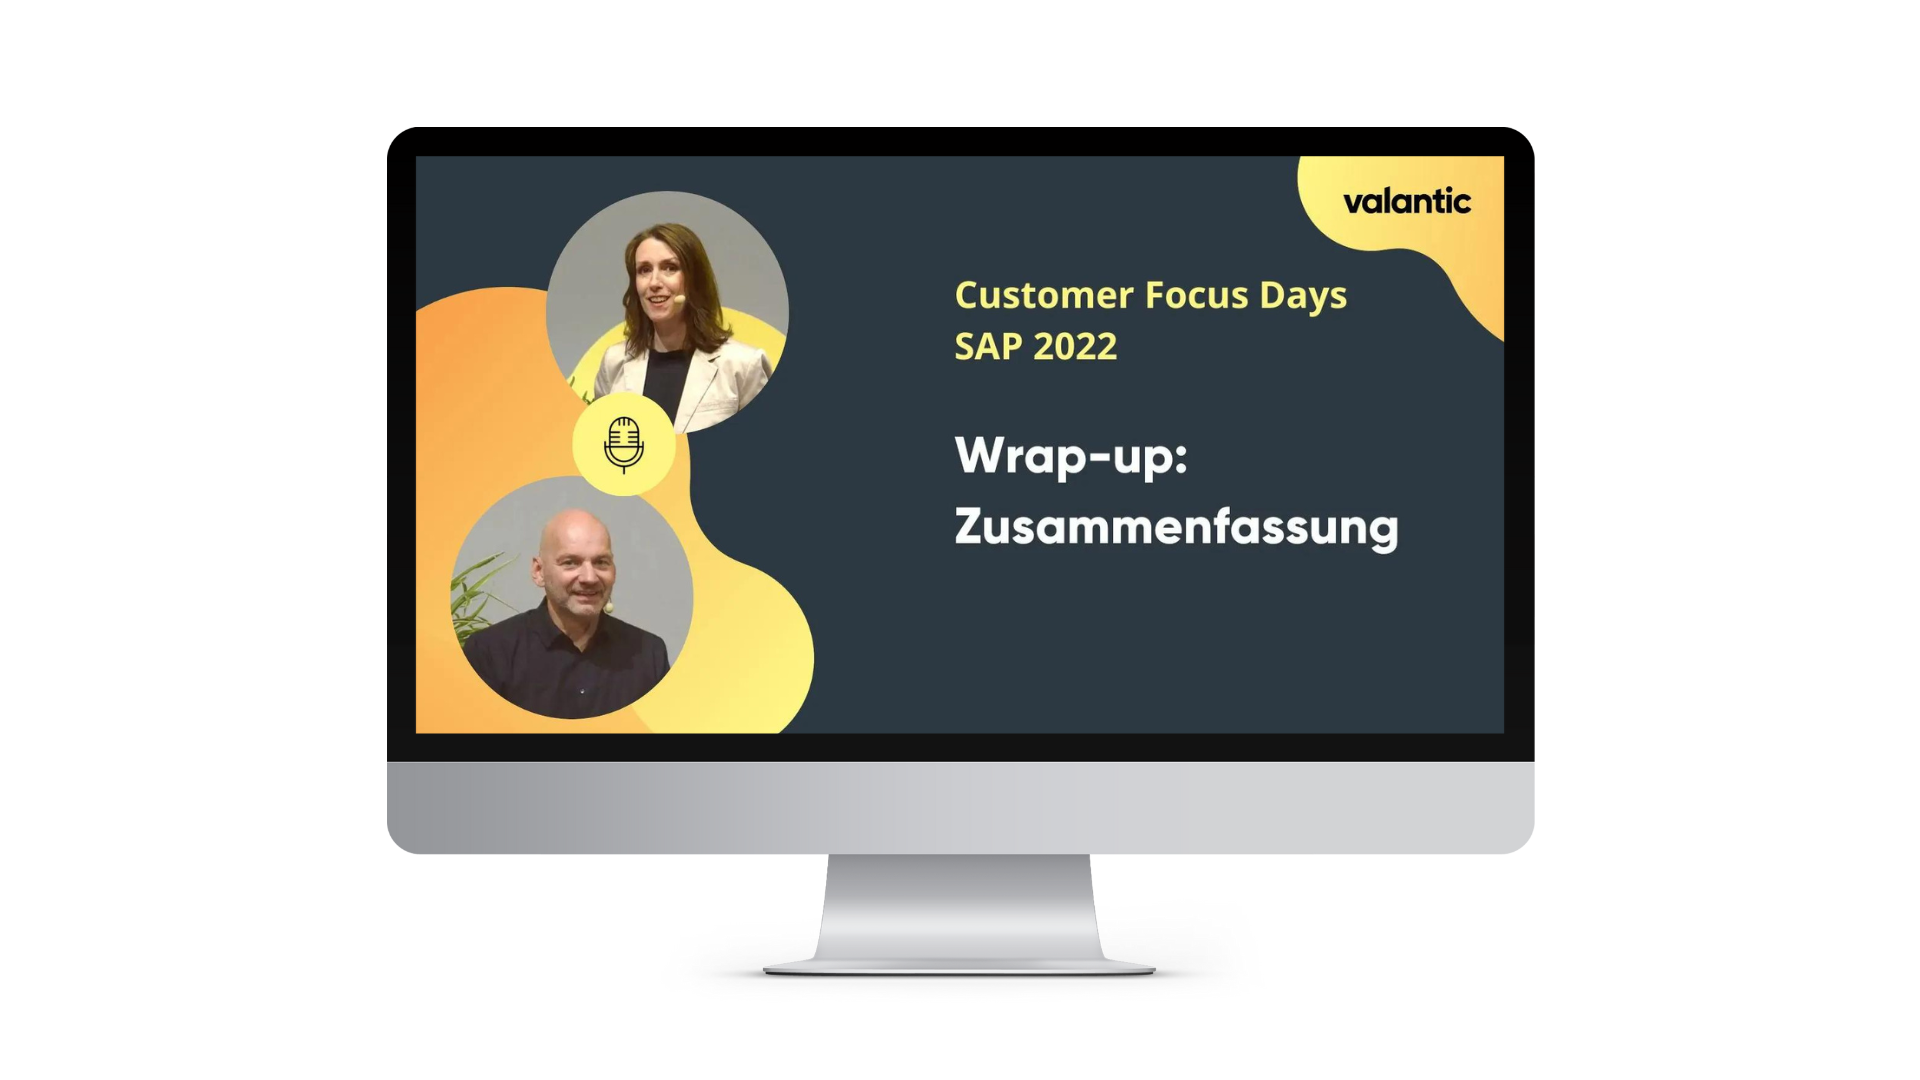 valantic Customer Focus Days SAP 2022: Review